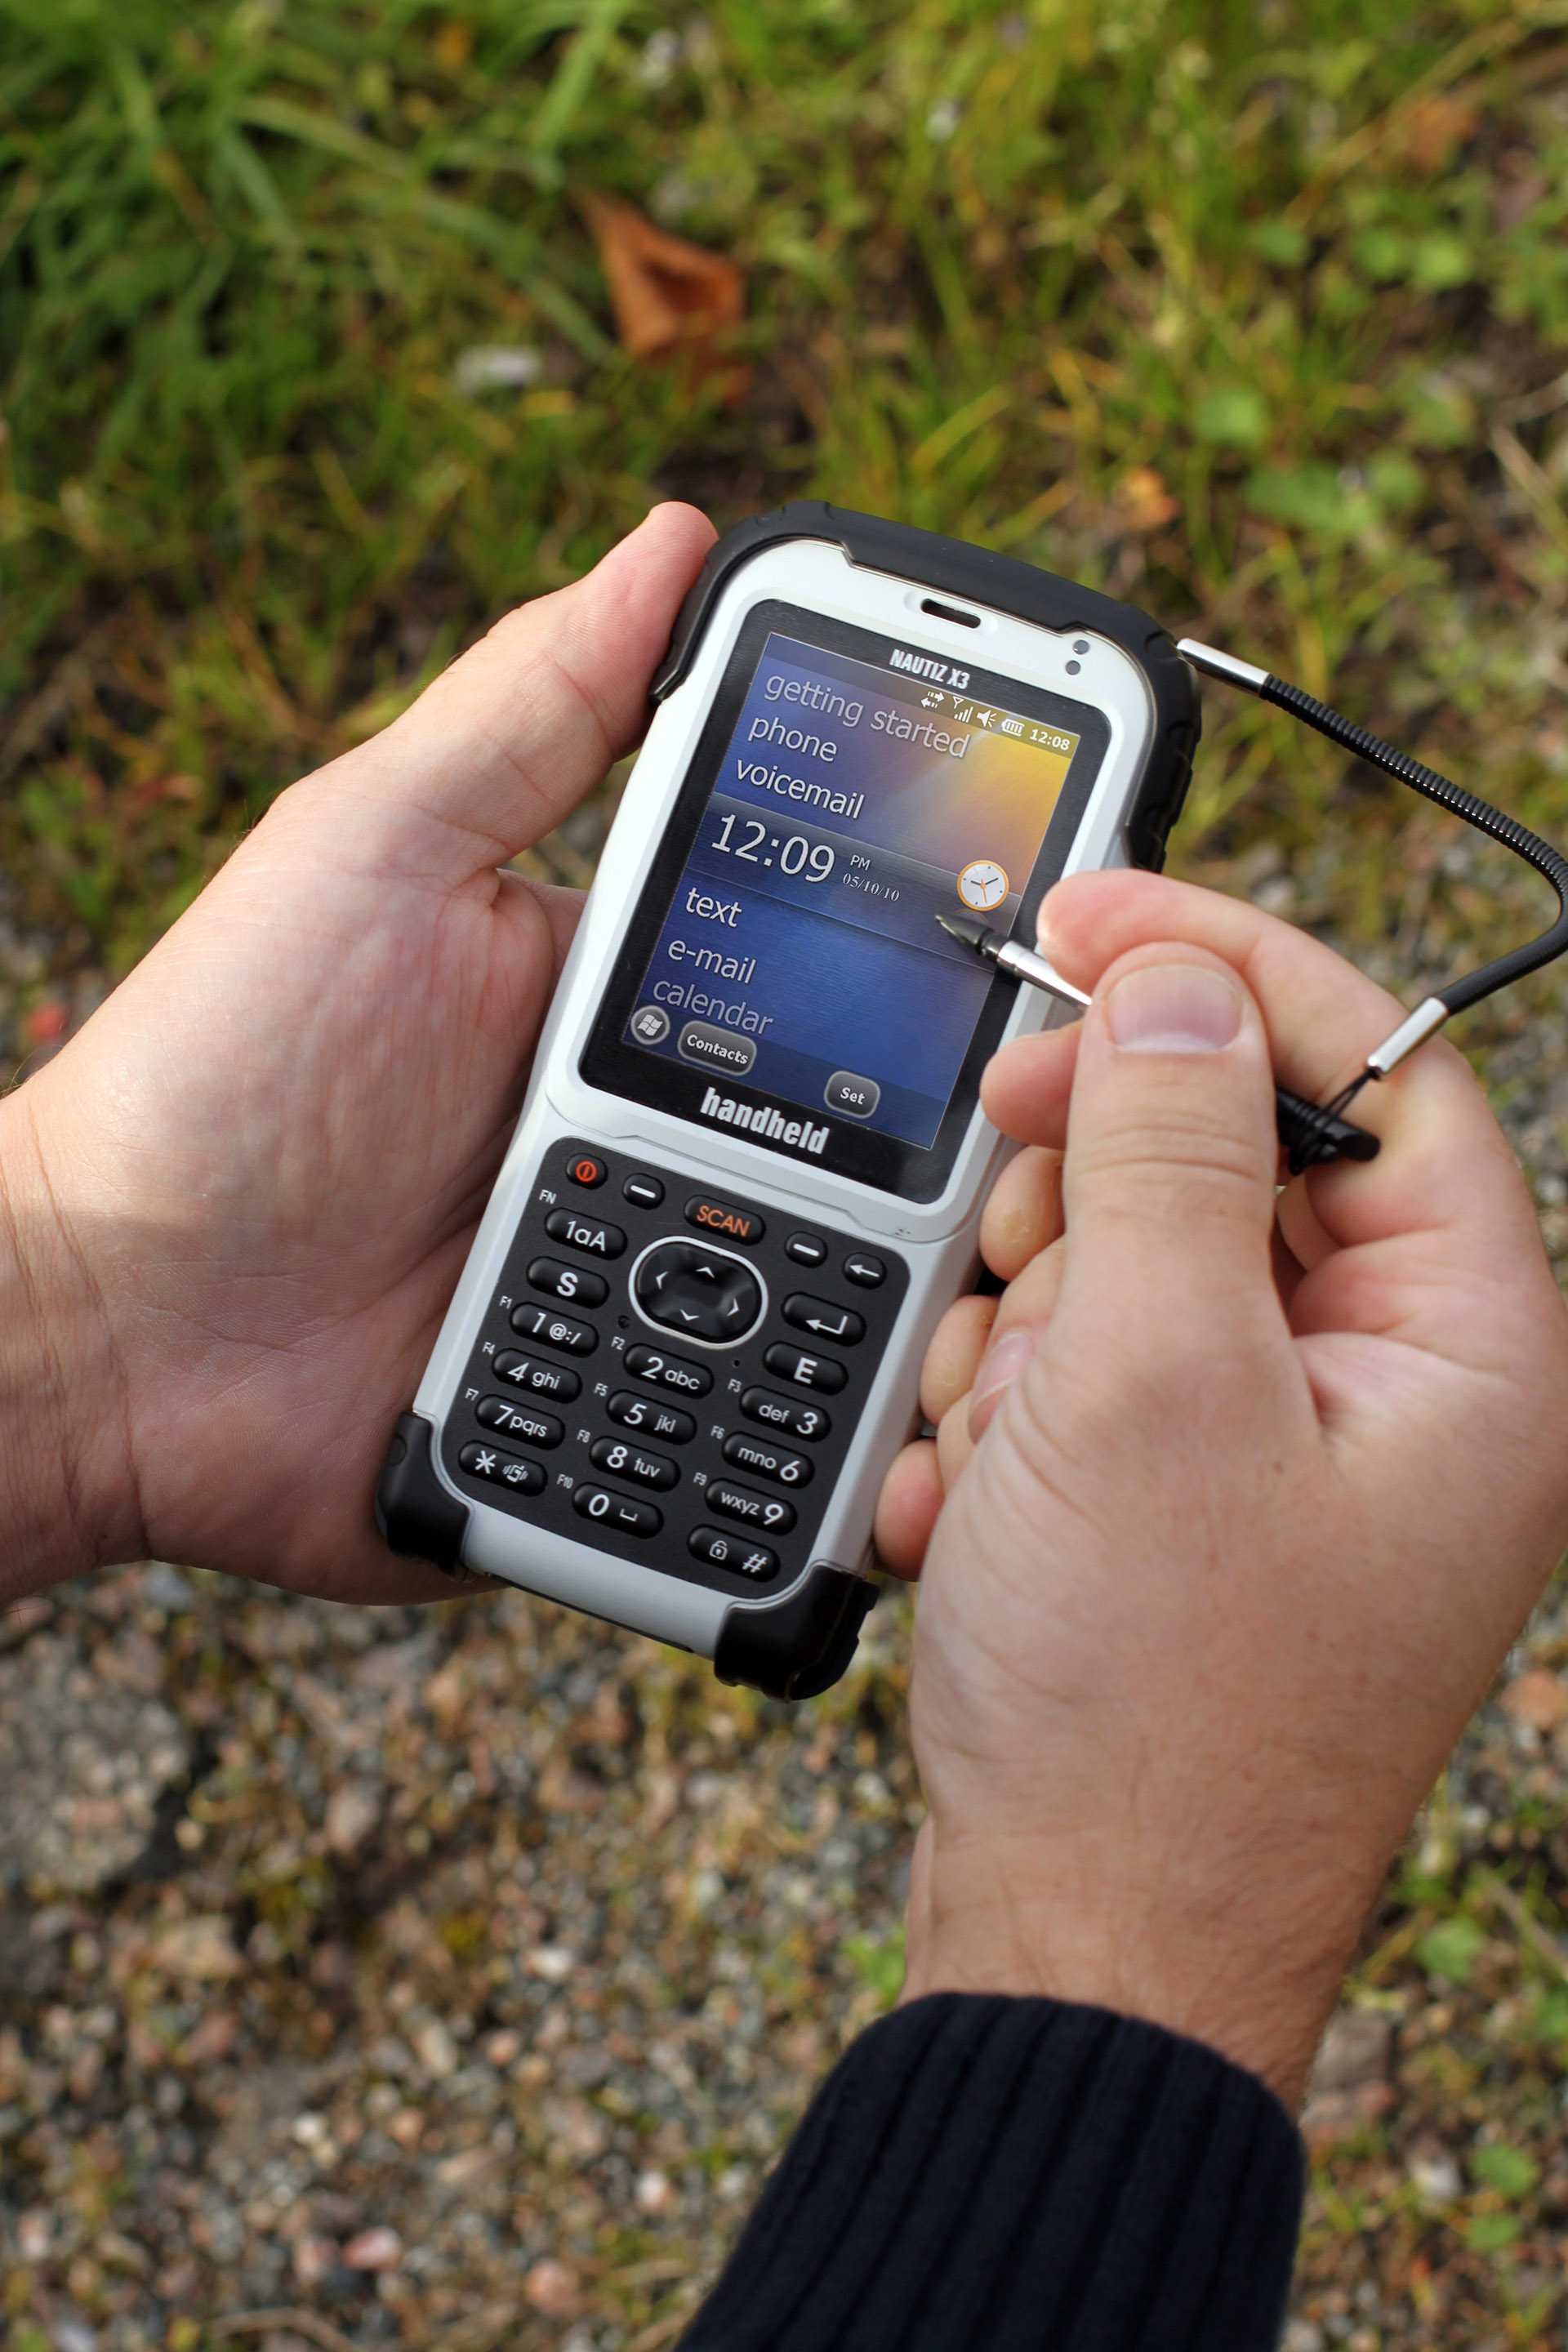 Nautiz-X3-IP65-ultra-compact-phone-capabilities-in-hands.jpg